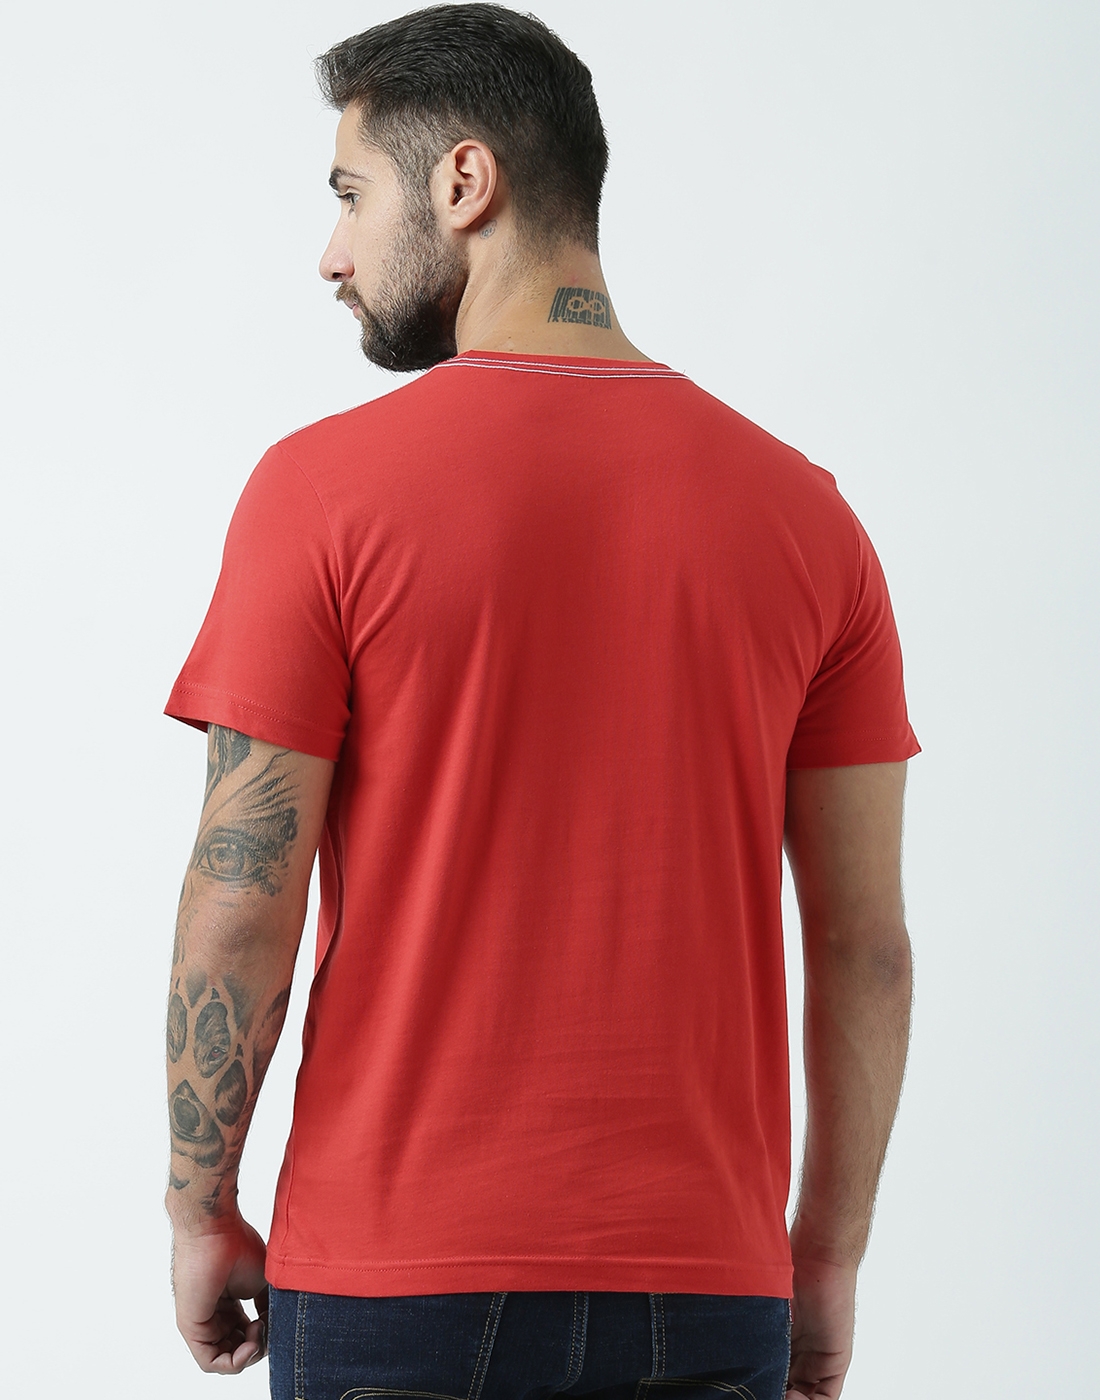 HUETRAP | Huetrap Men's Graphic Round Neck Short Sleeve Red T-Shirt 1